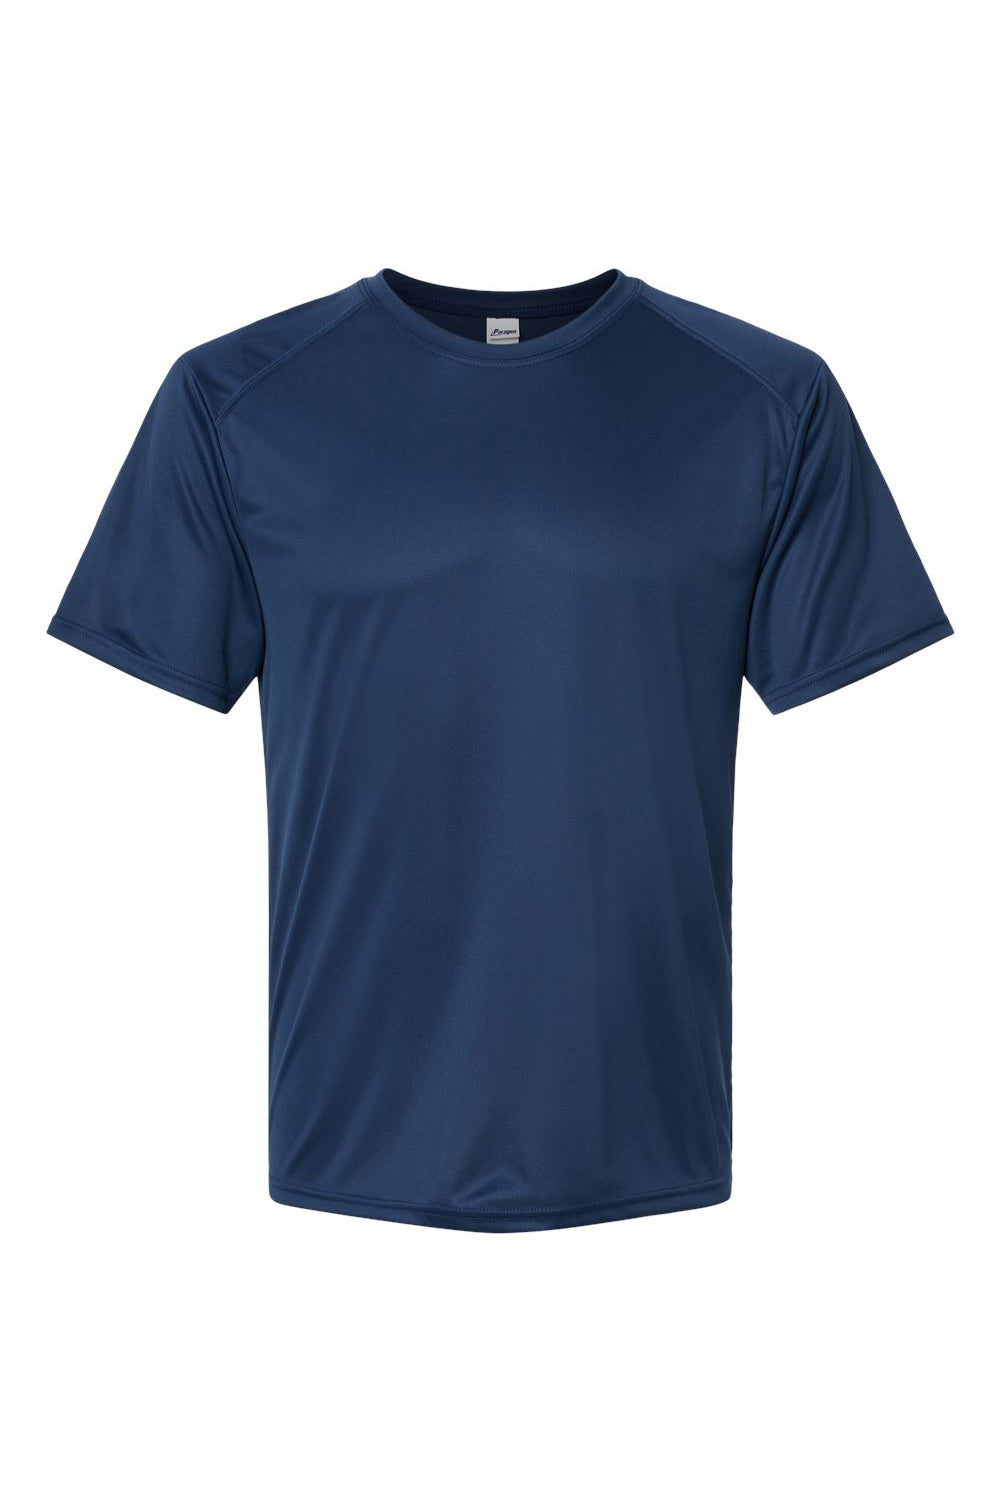 Paragon 200 Mens Islander Performance Short Sleeve Crewneck T-Shirt Navy Blue Flat Front